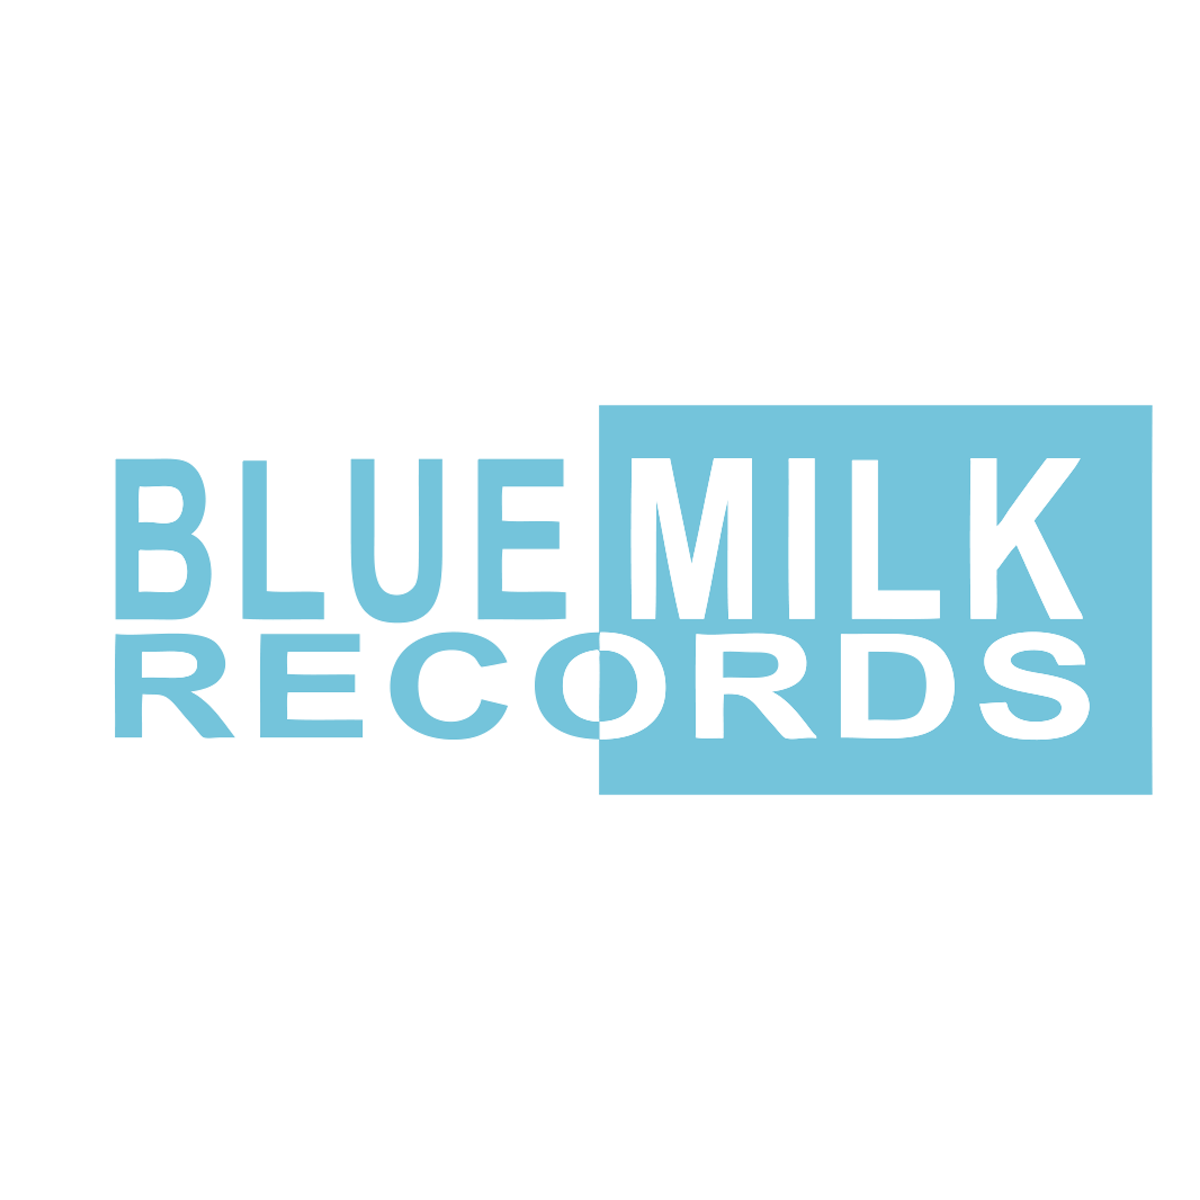 Blue Milk Records